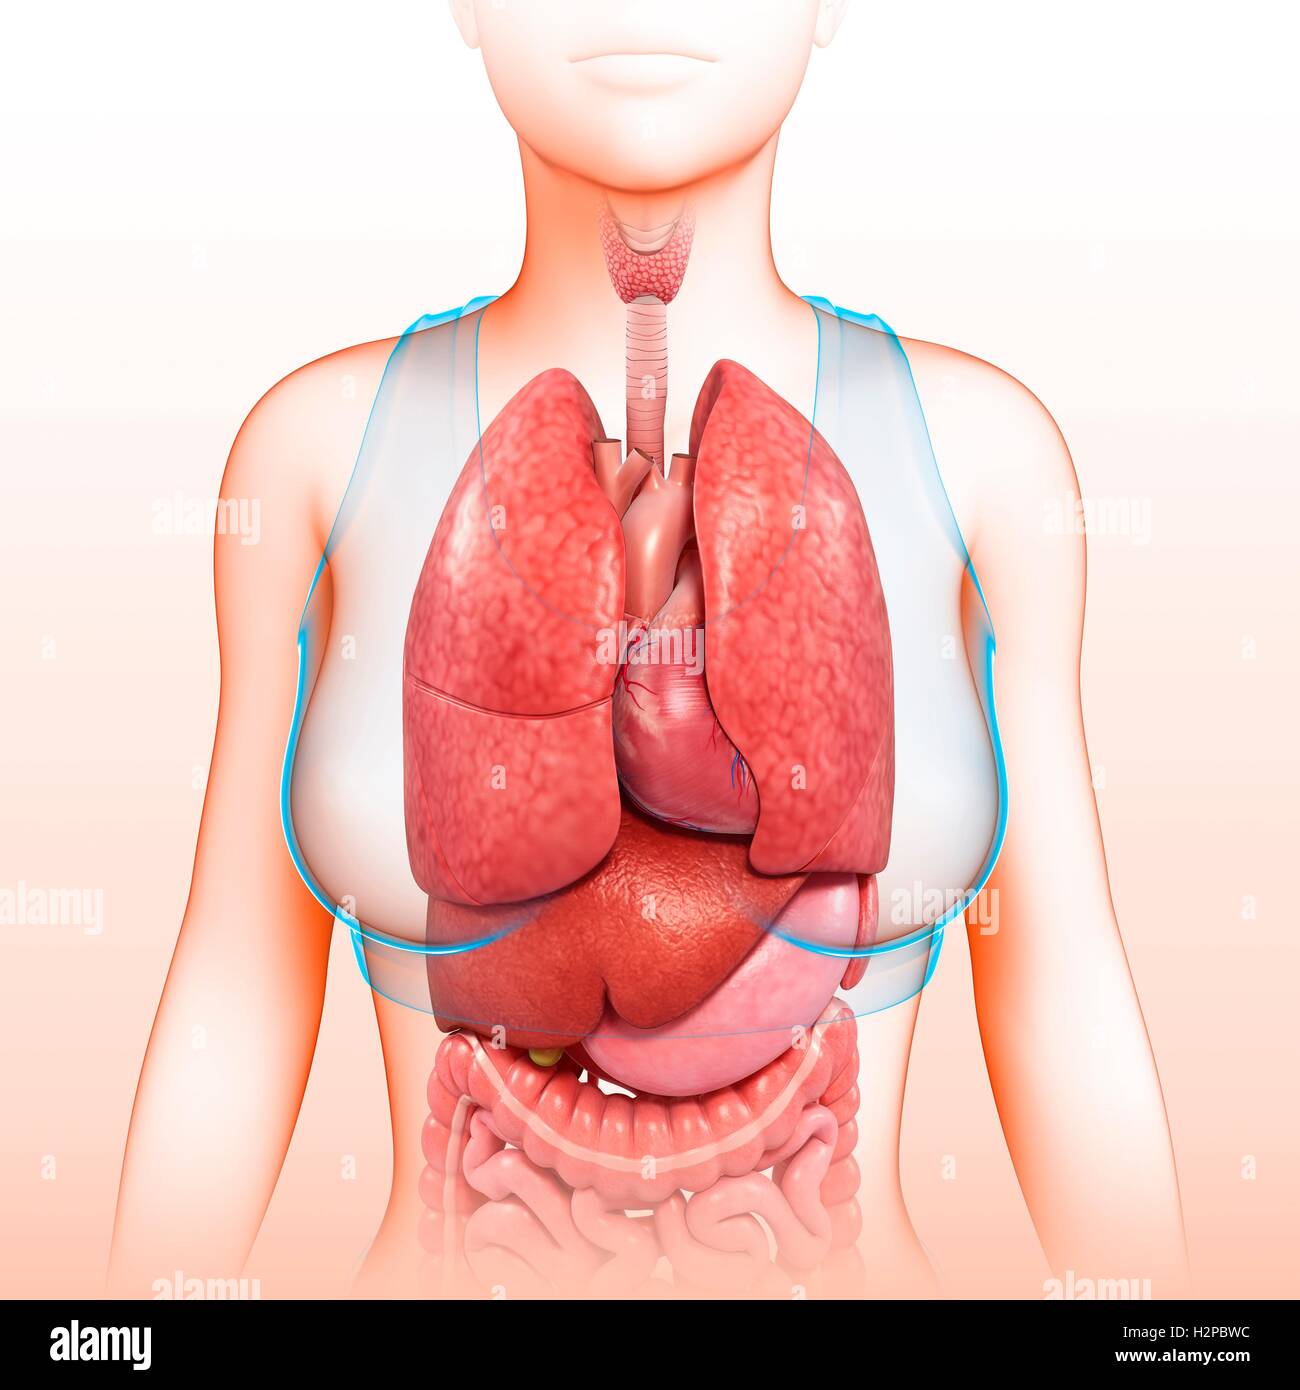 https://c8.alamy.com/comp/H2PBWC/illustration-of-female-chest-and-body-organs-H2PBWC.jpg